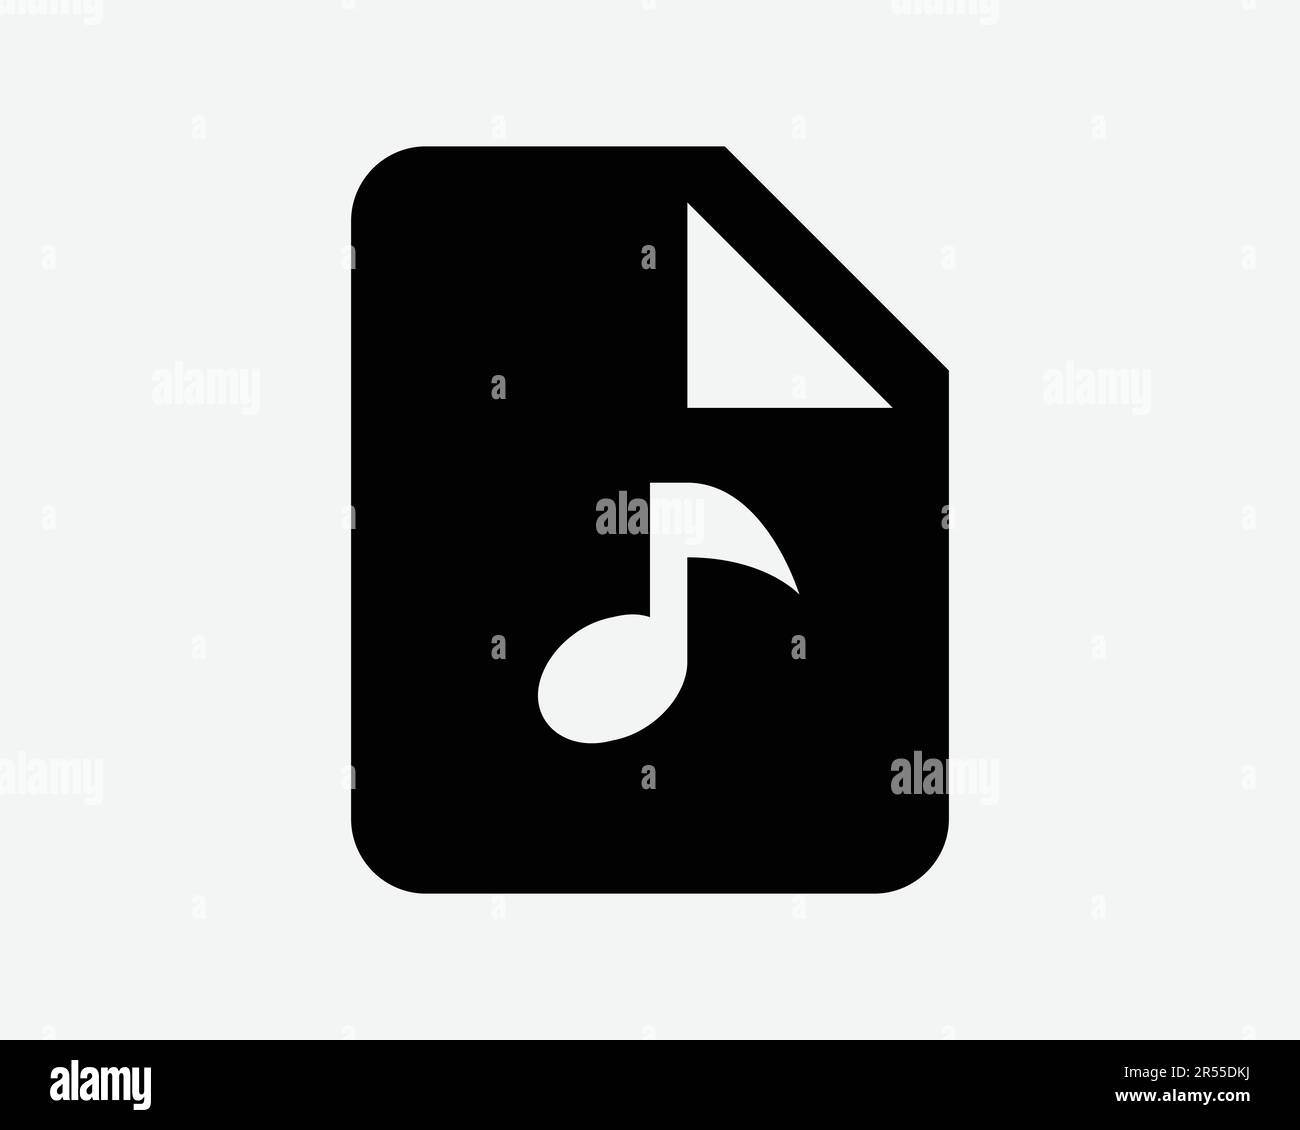 Music File Icon. Musical Audio Document Folder Sound mp3 Media Type Format Internet Sign Symbol Black Artwork Graphic Illustration Clipart EPS Vector Stock Vector